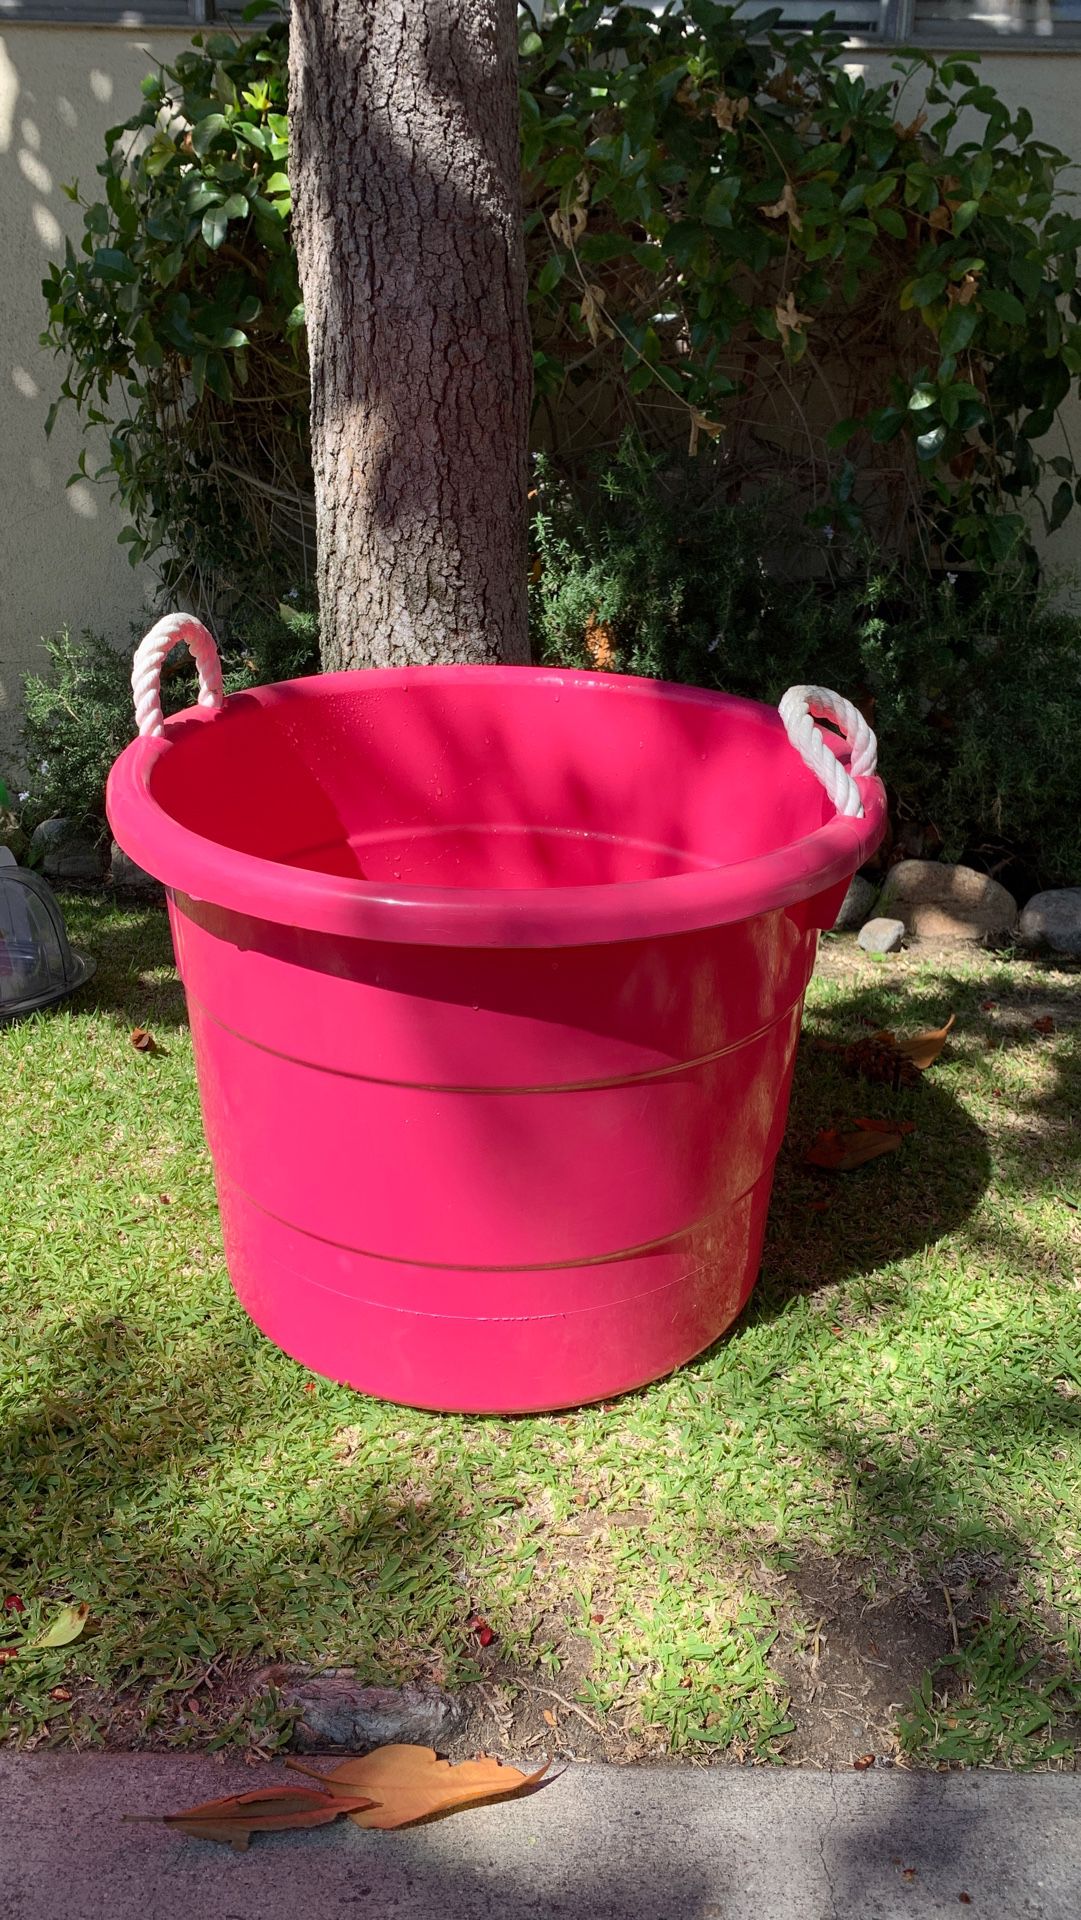 Hot pink drink tub